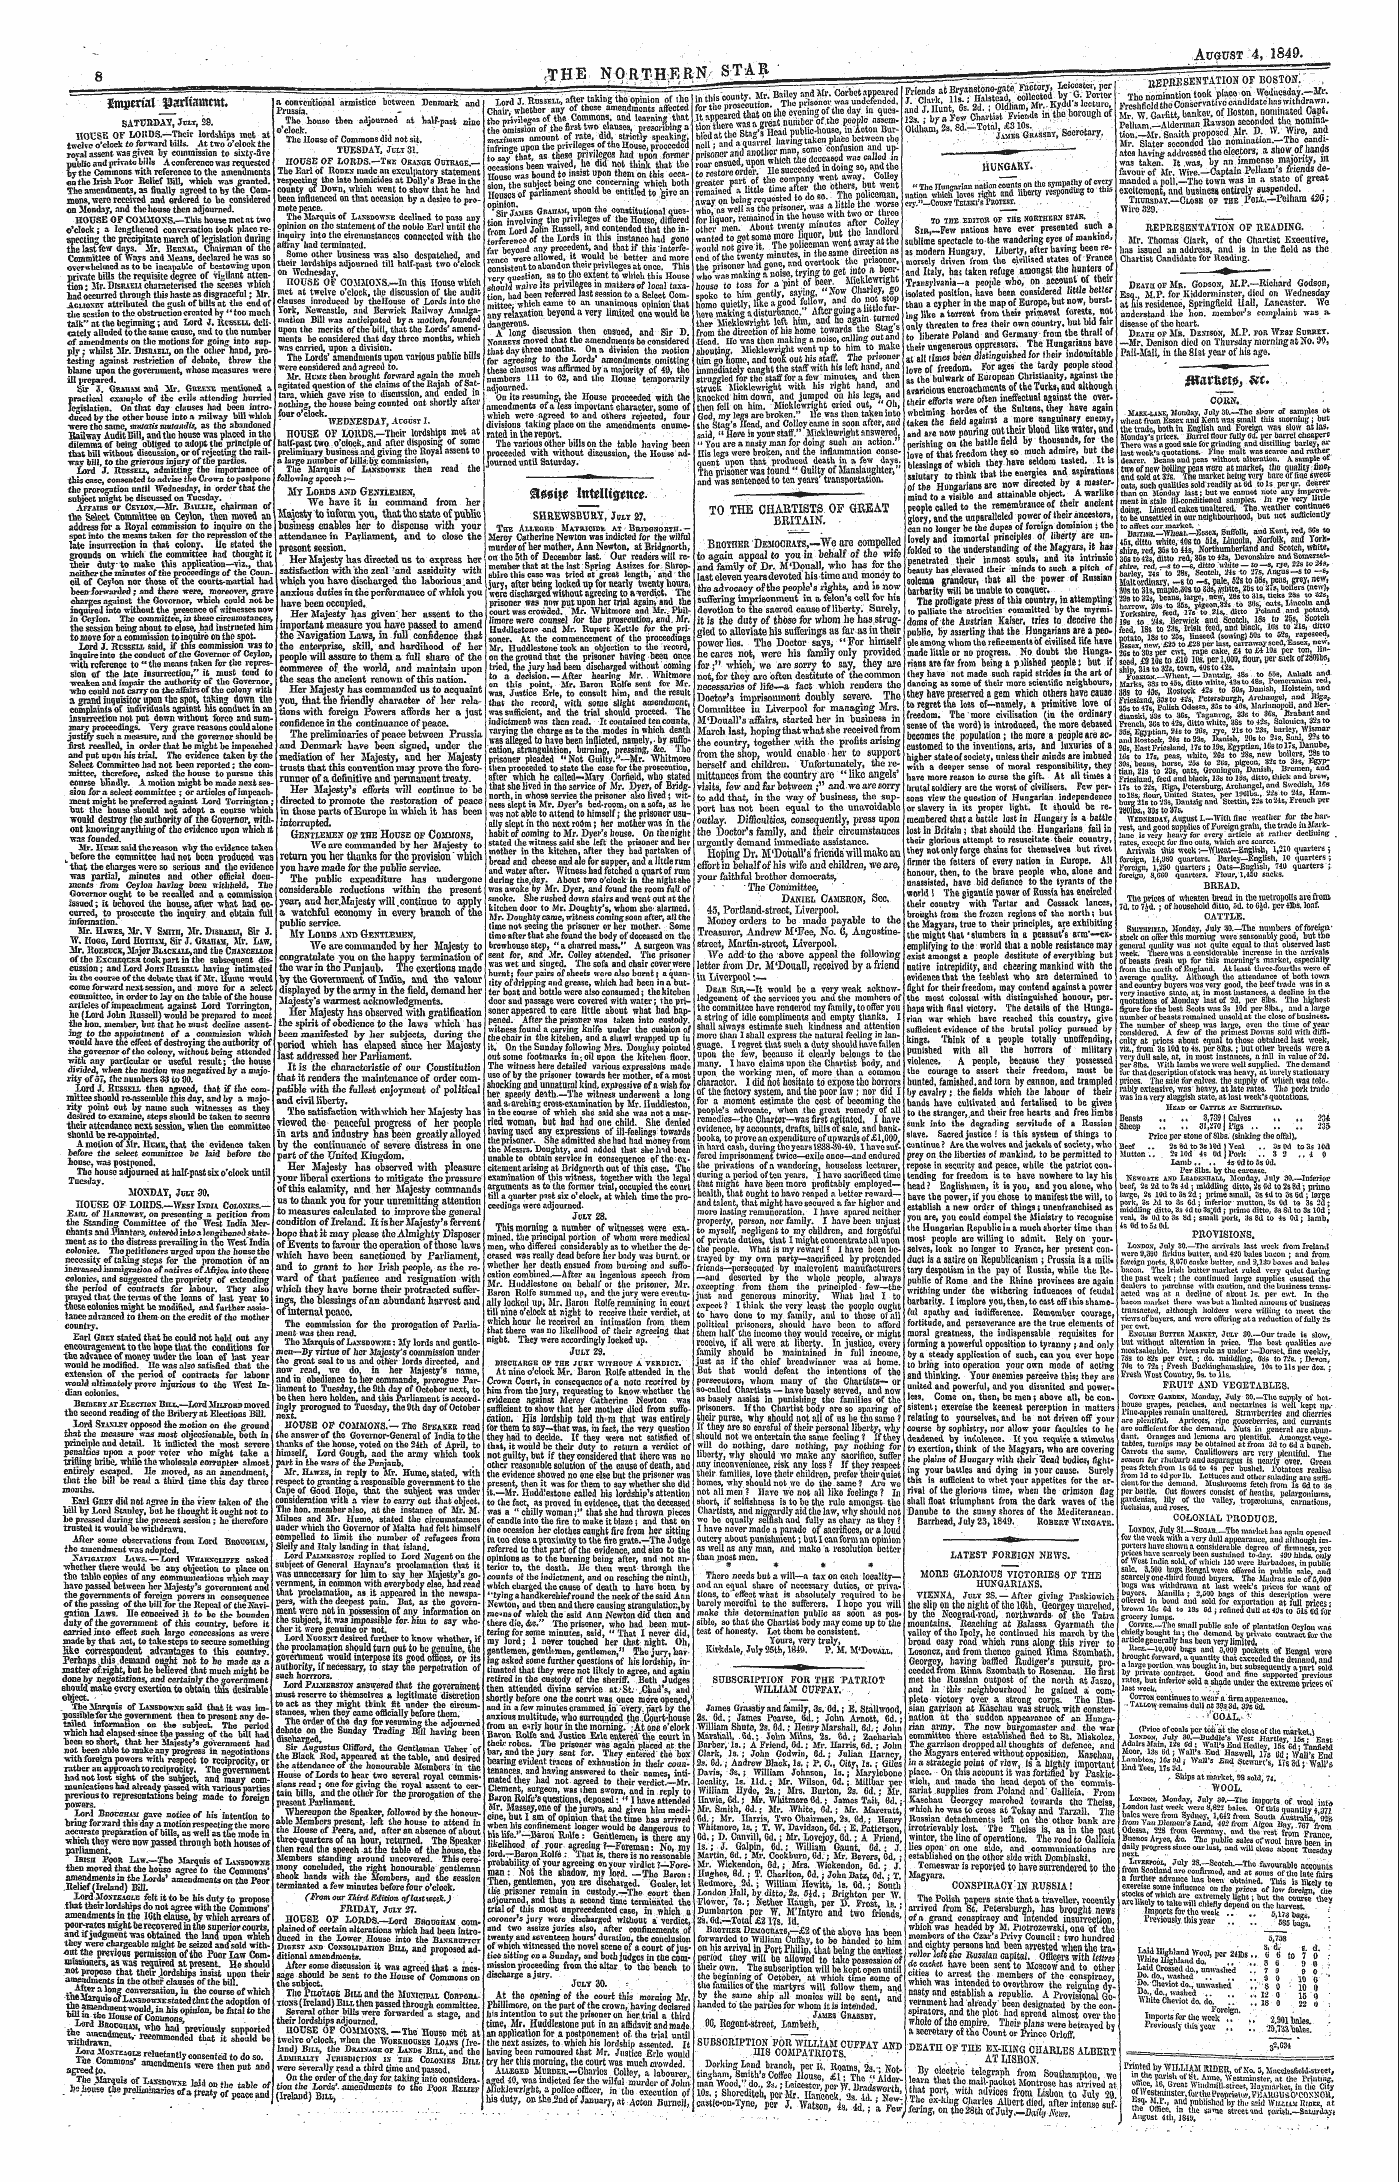 Northern Star (1837-1852): jS F Y, 2nd edition - Shrewsbury, July 27. The Alleged Matrici...